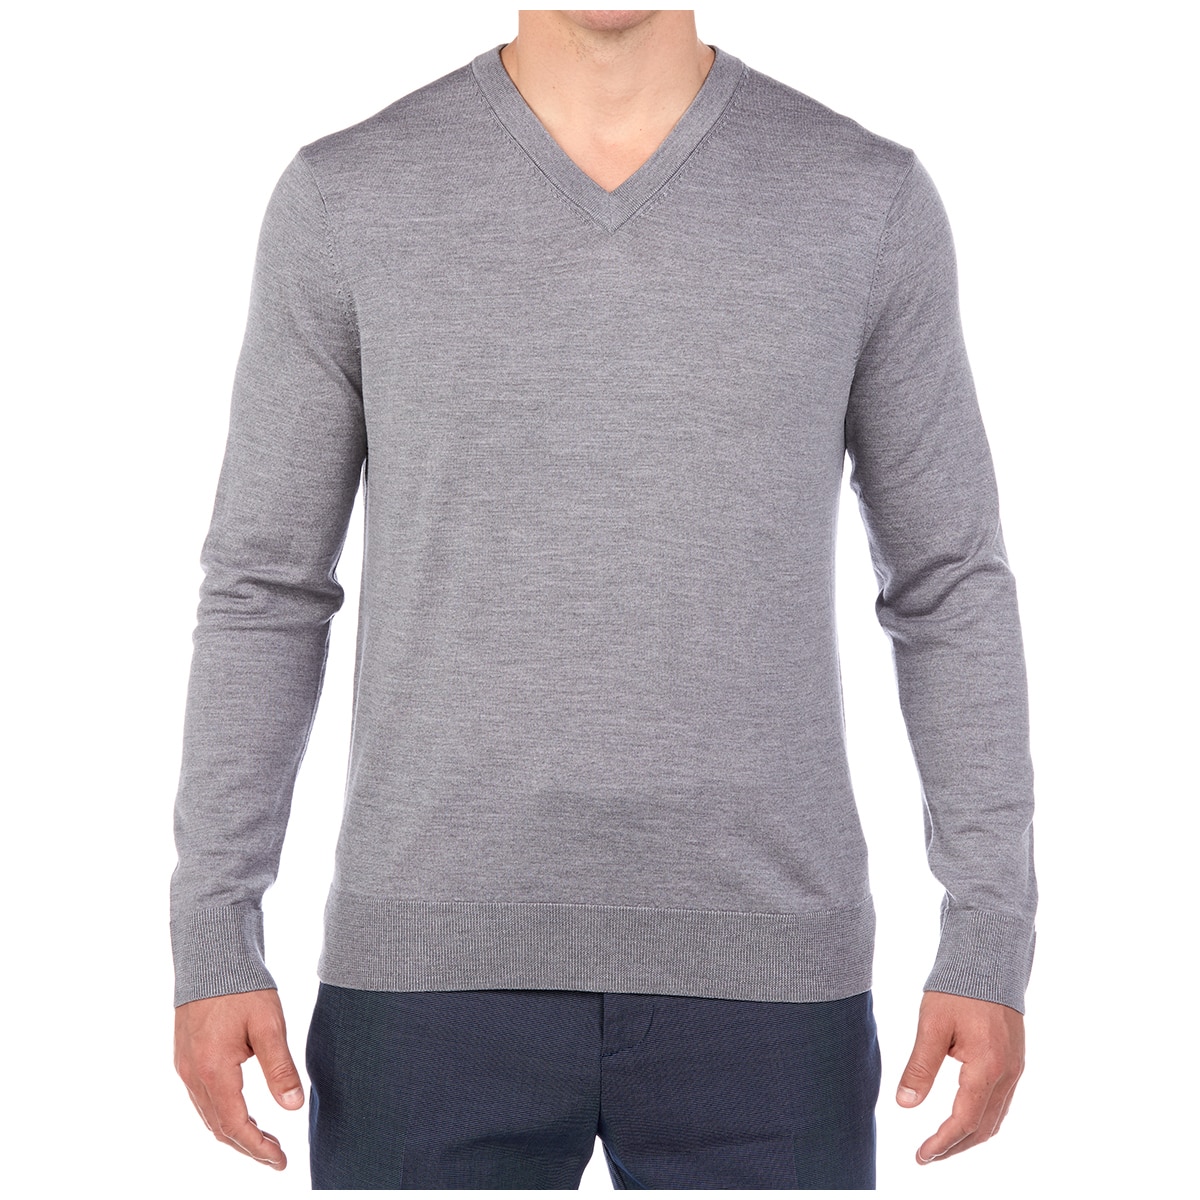 Brooks Brothers Sweater - Grey